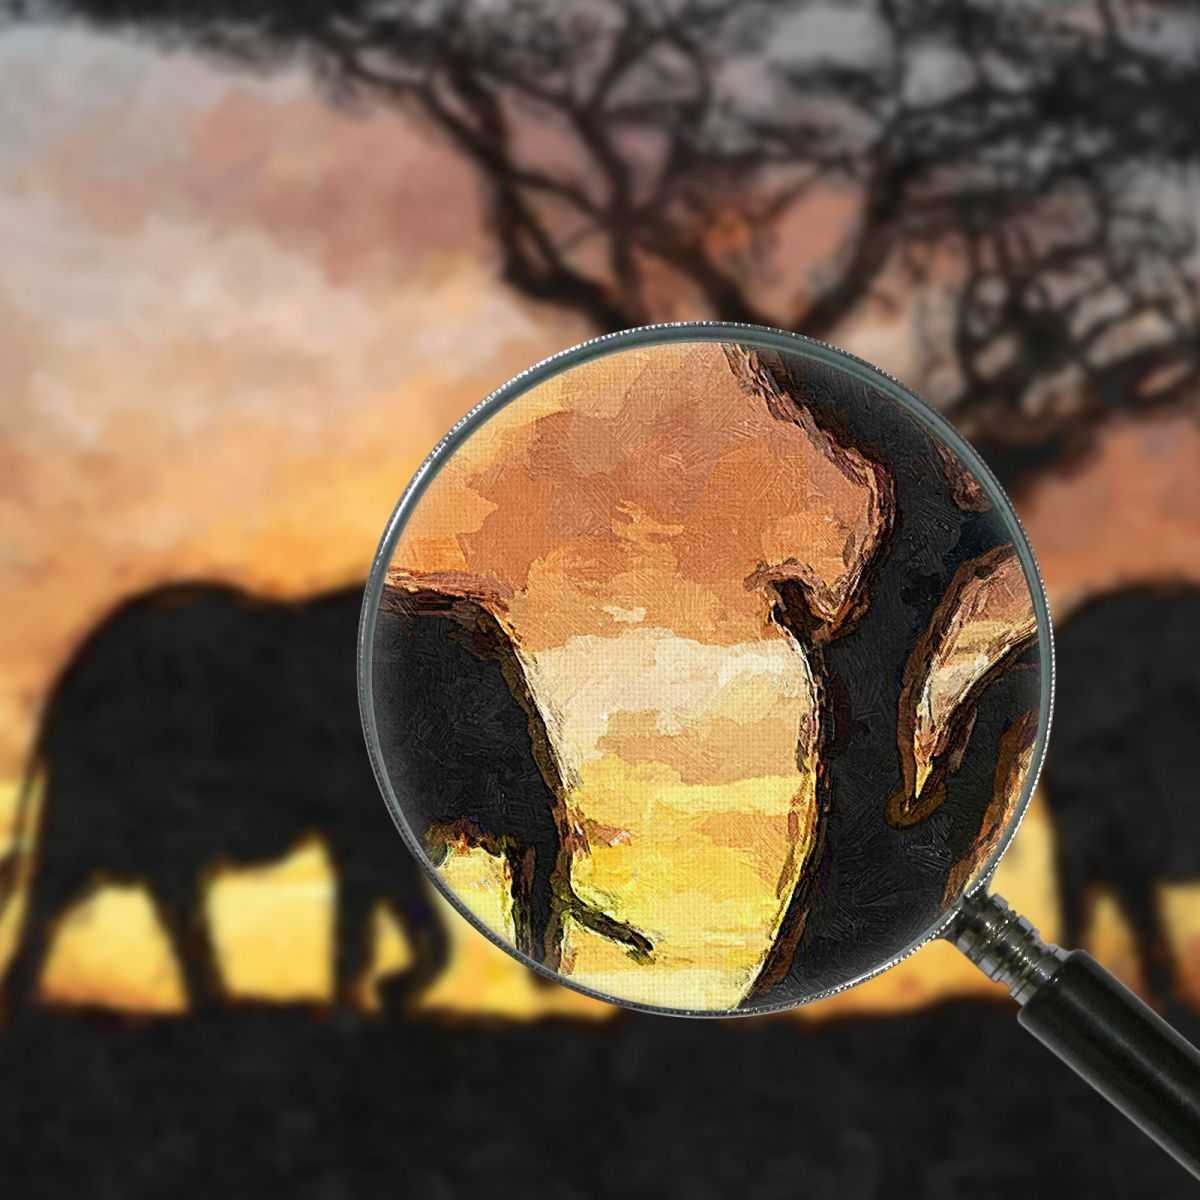 ❤️️ Quadro etnico famiglia di elefanti quadro africano stampa su tela afr21